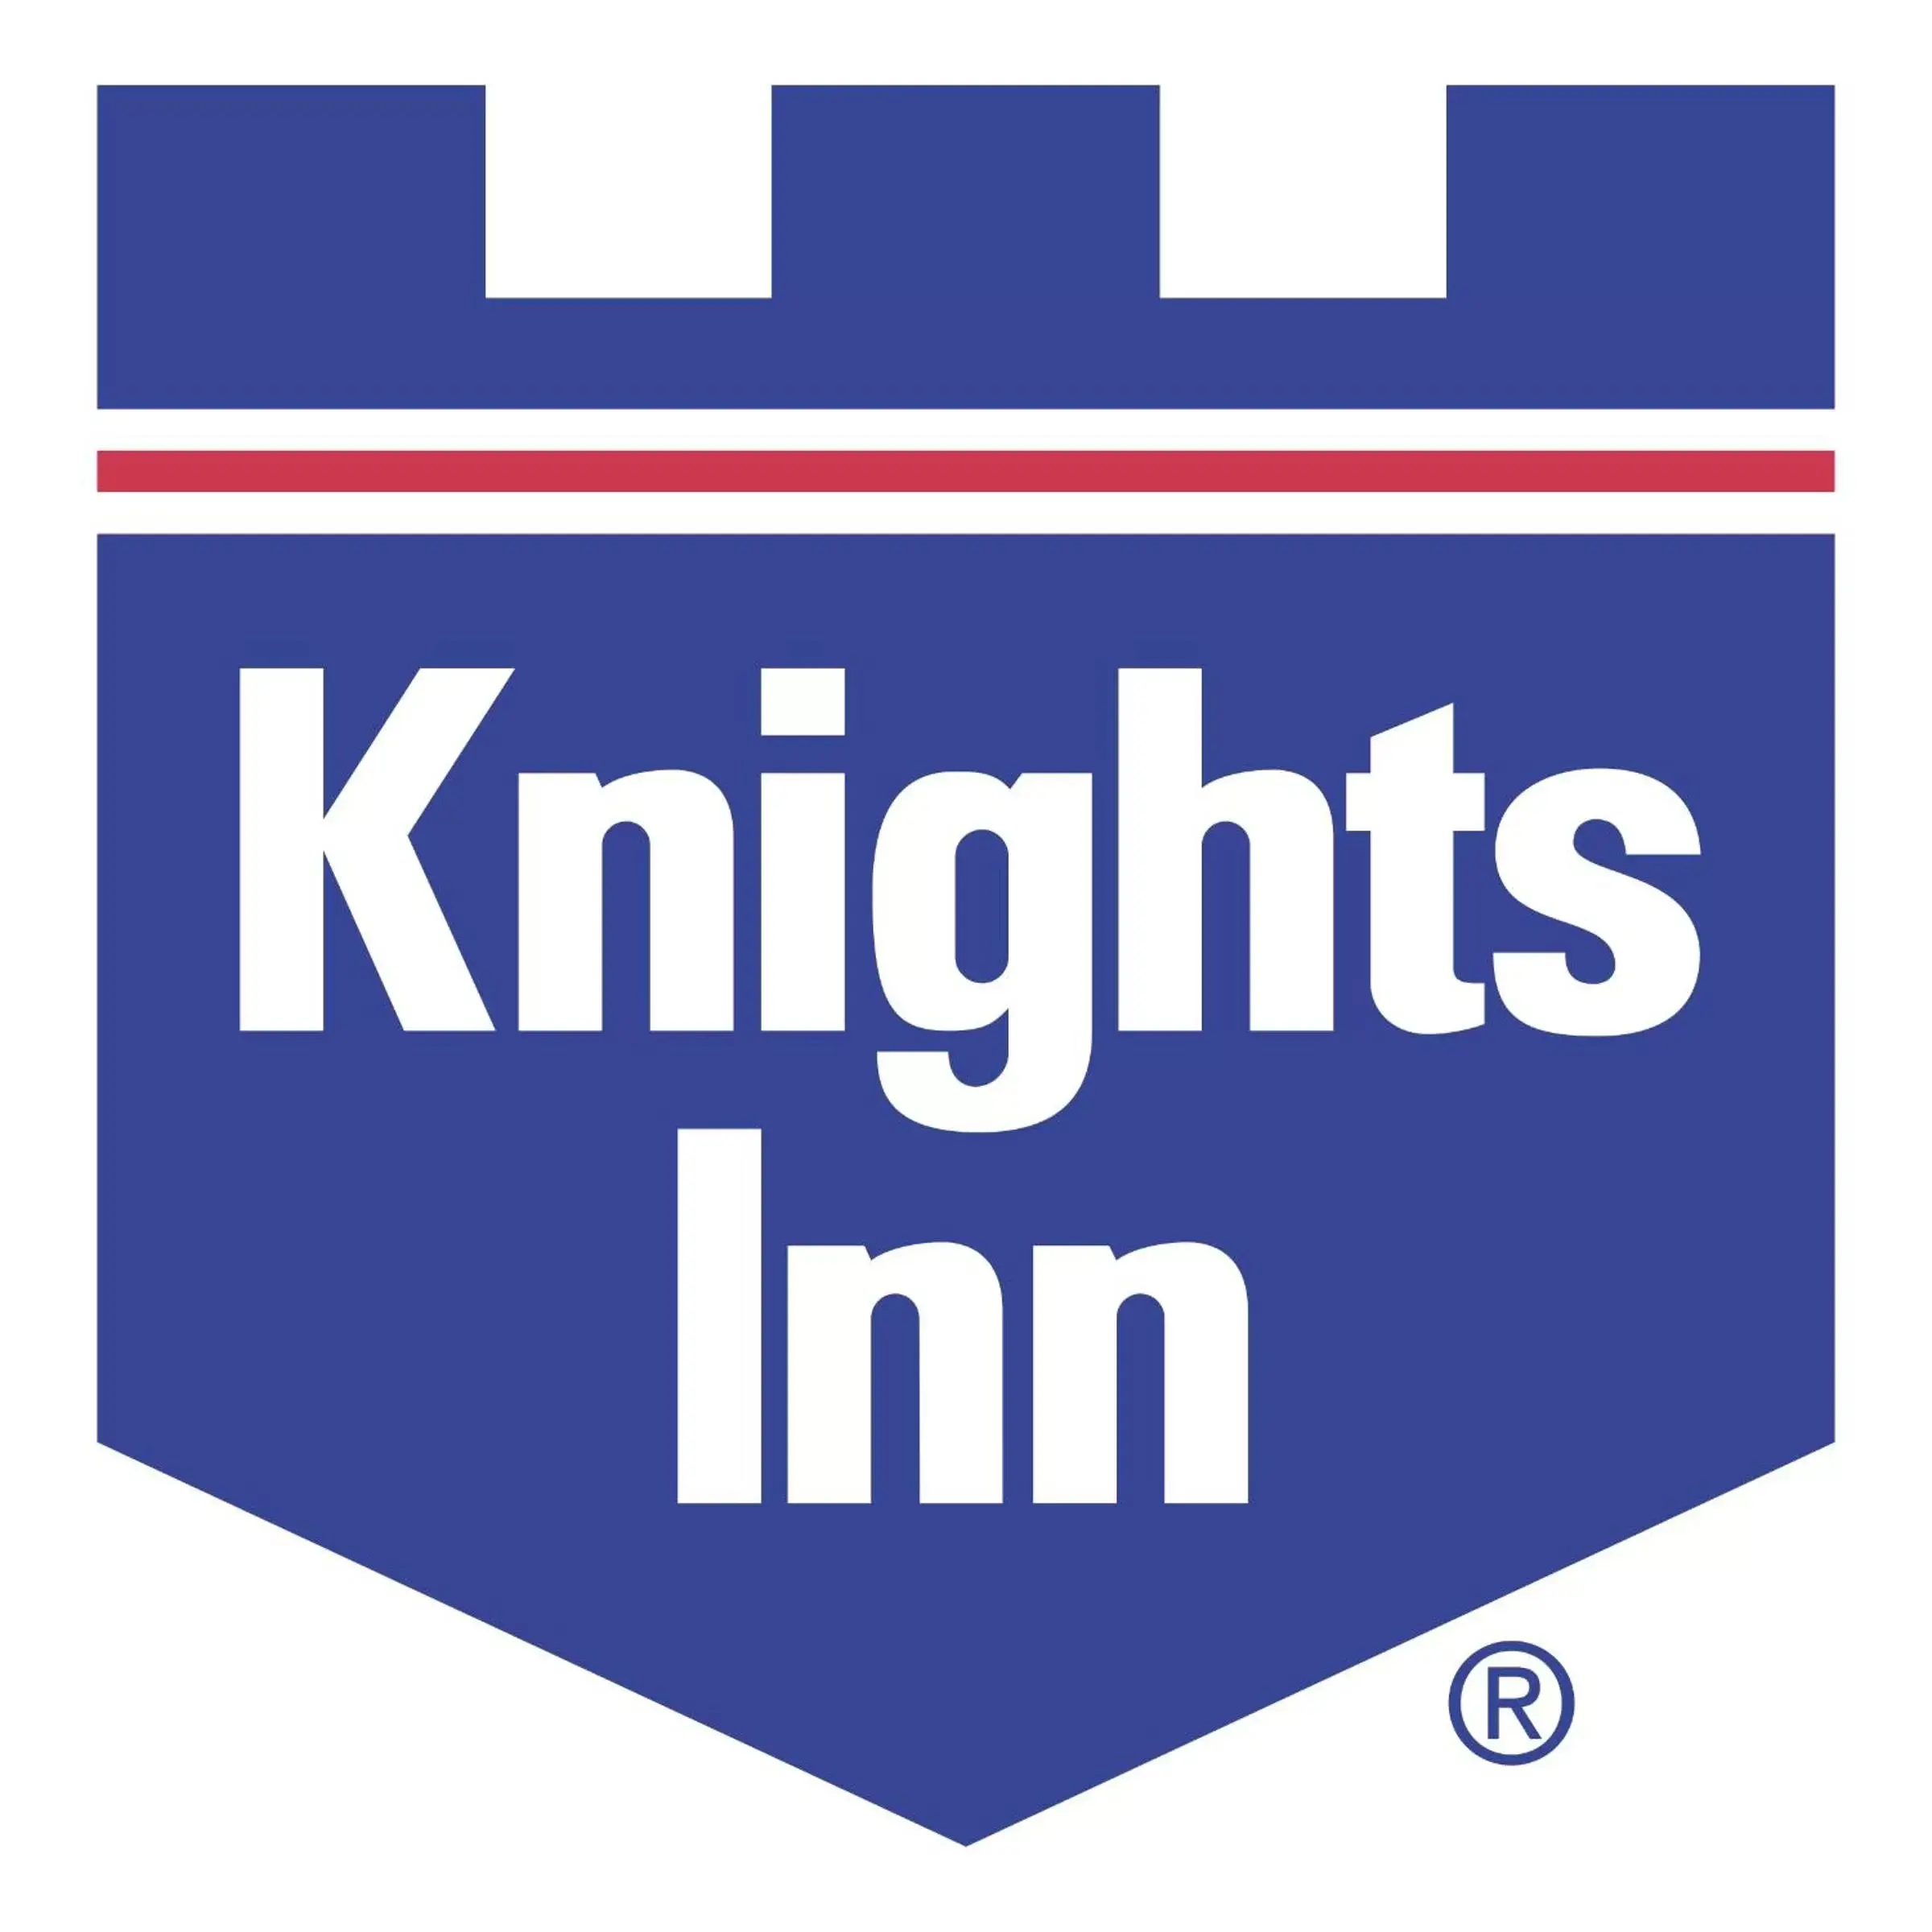 Property logo or sign in Knights Inn Colonial Fireside Inn